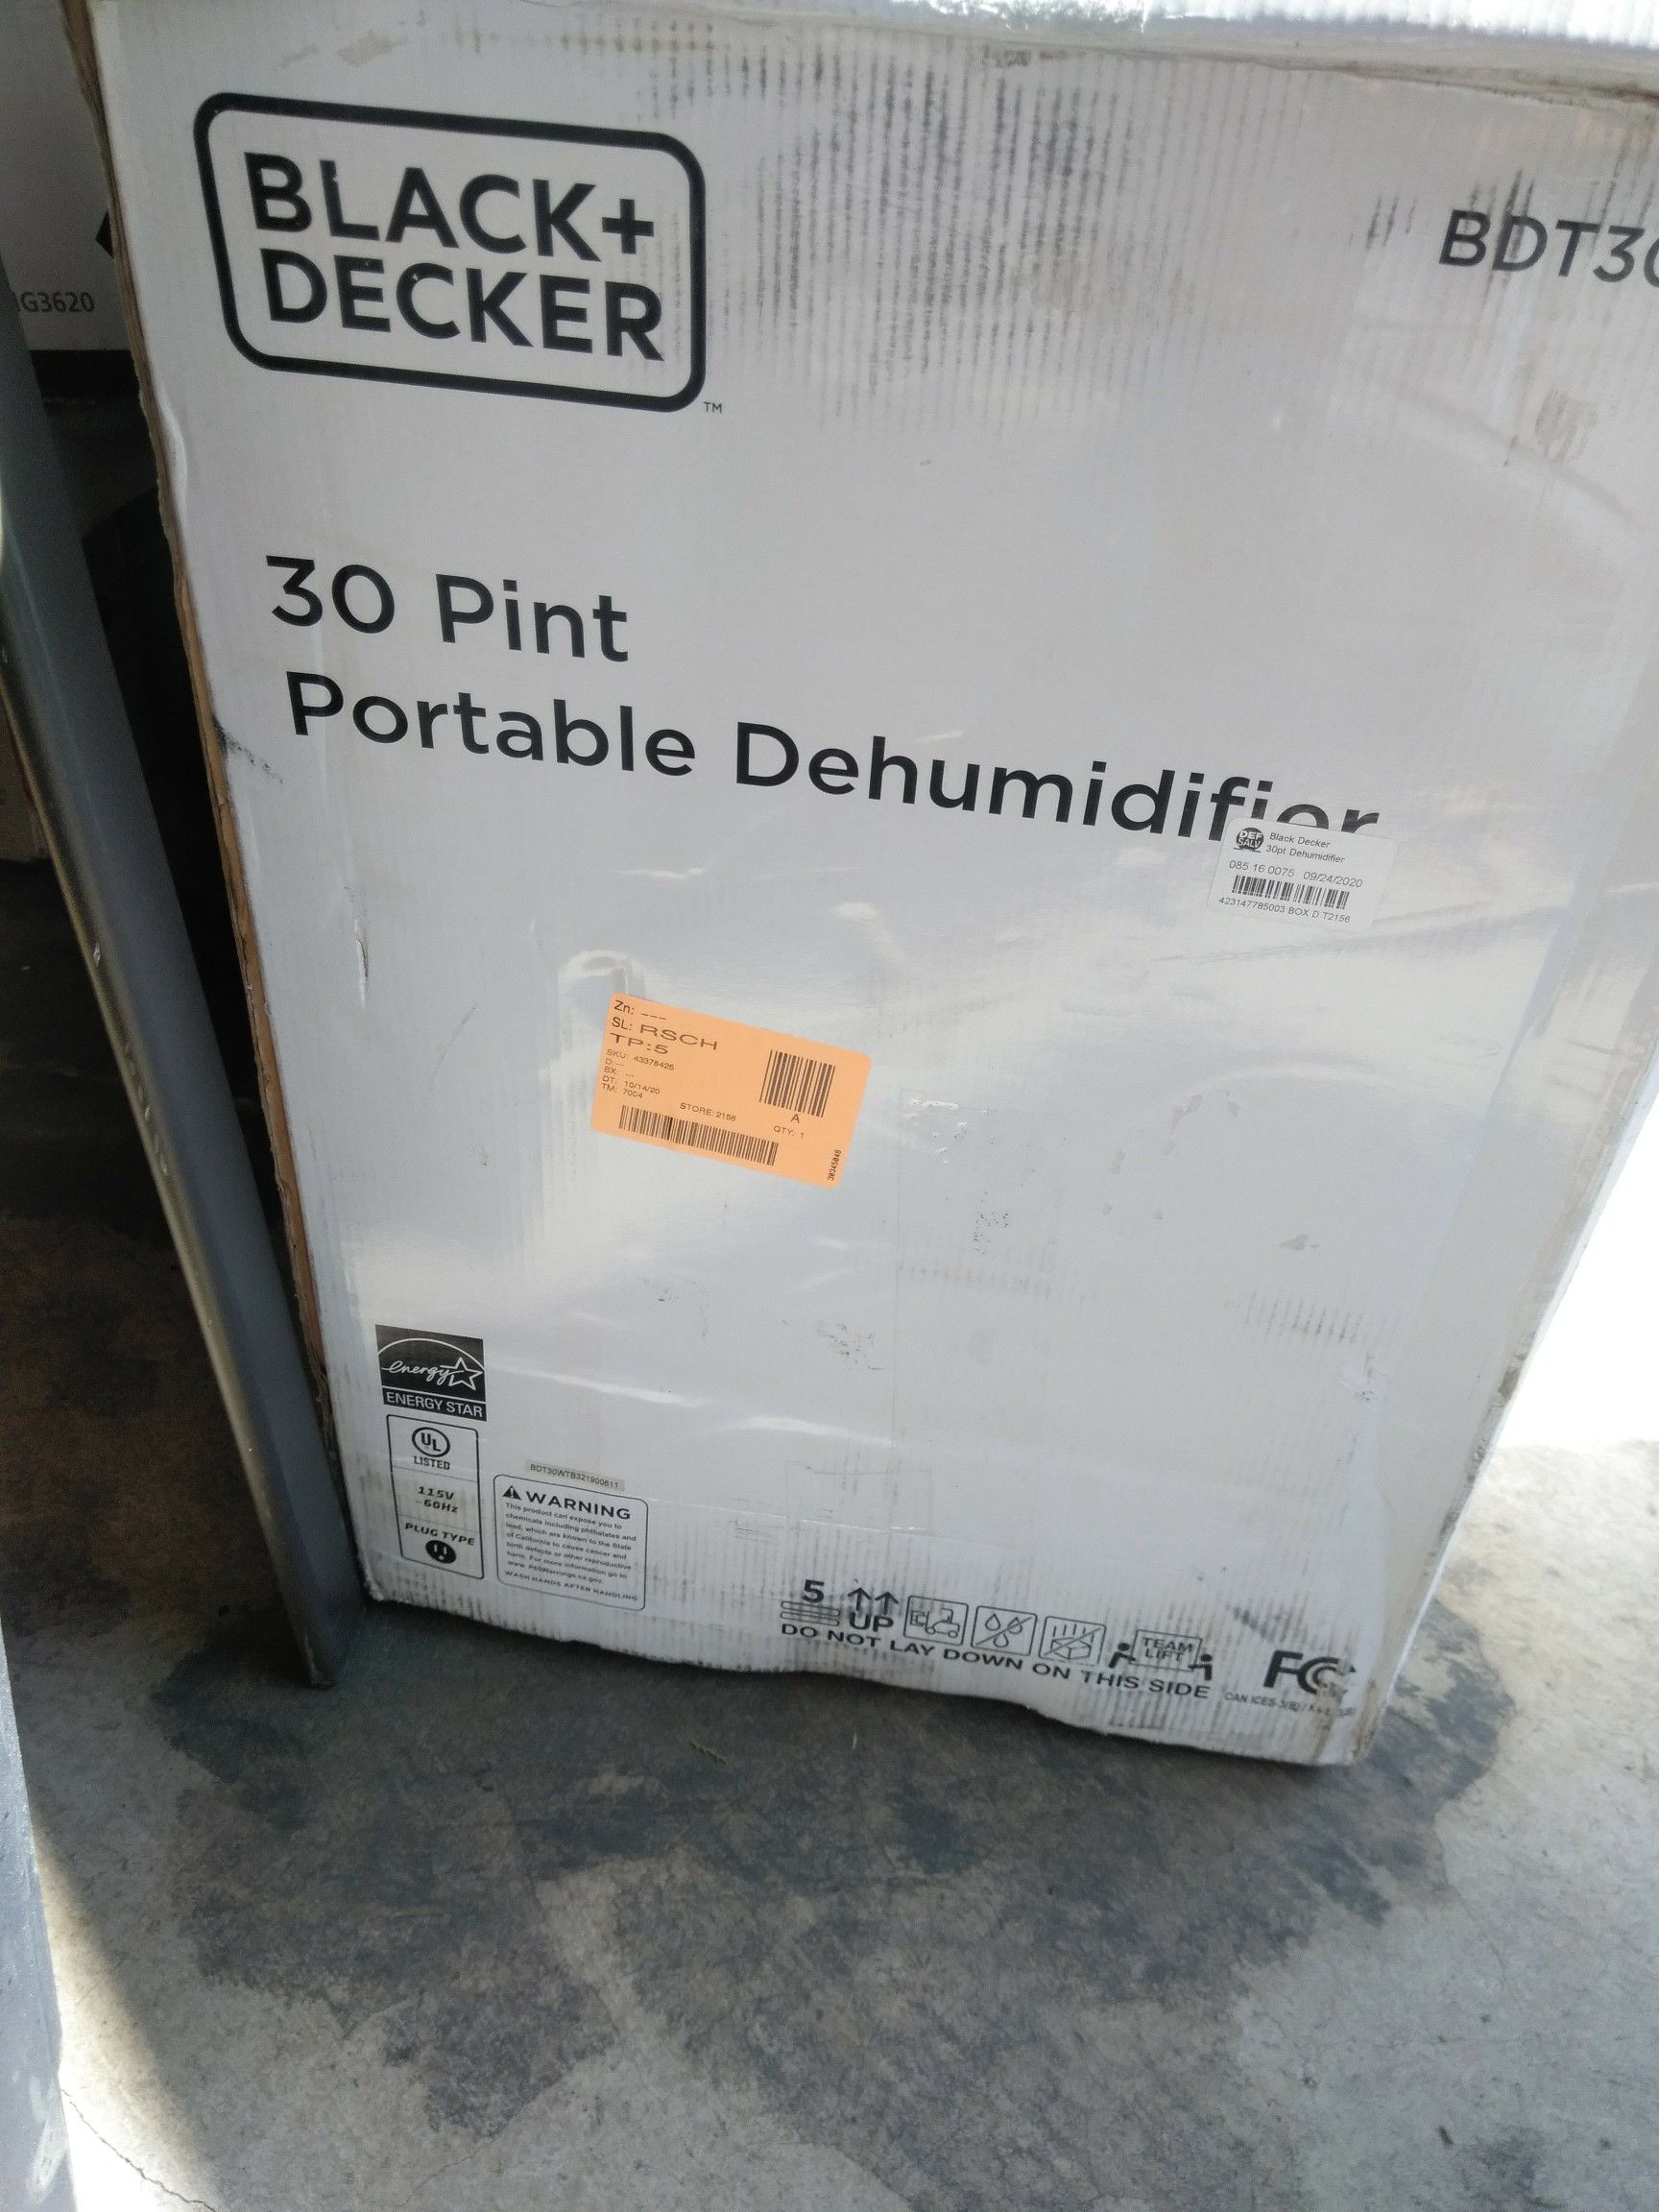 Black and decker 30 pint portable dehumidifier